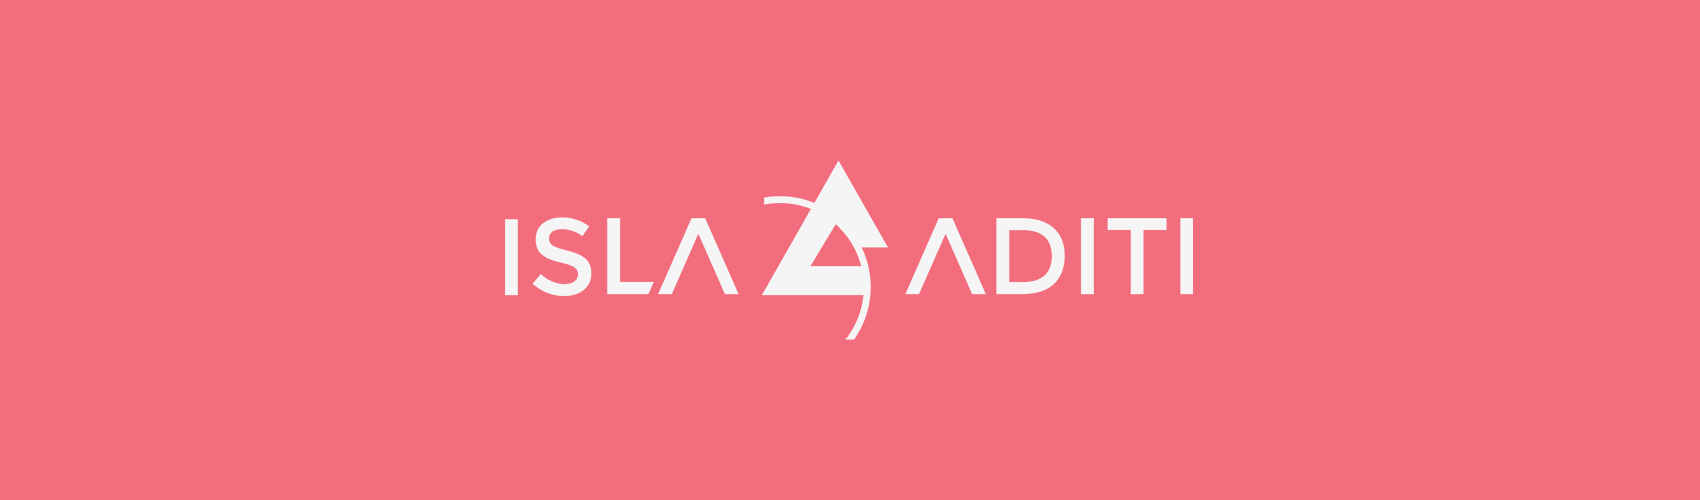 isla aditi swimwear brand logo